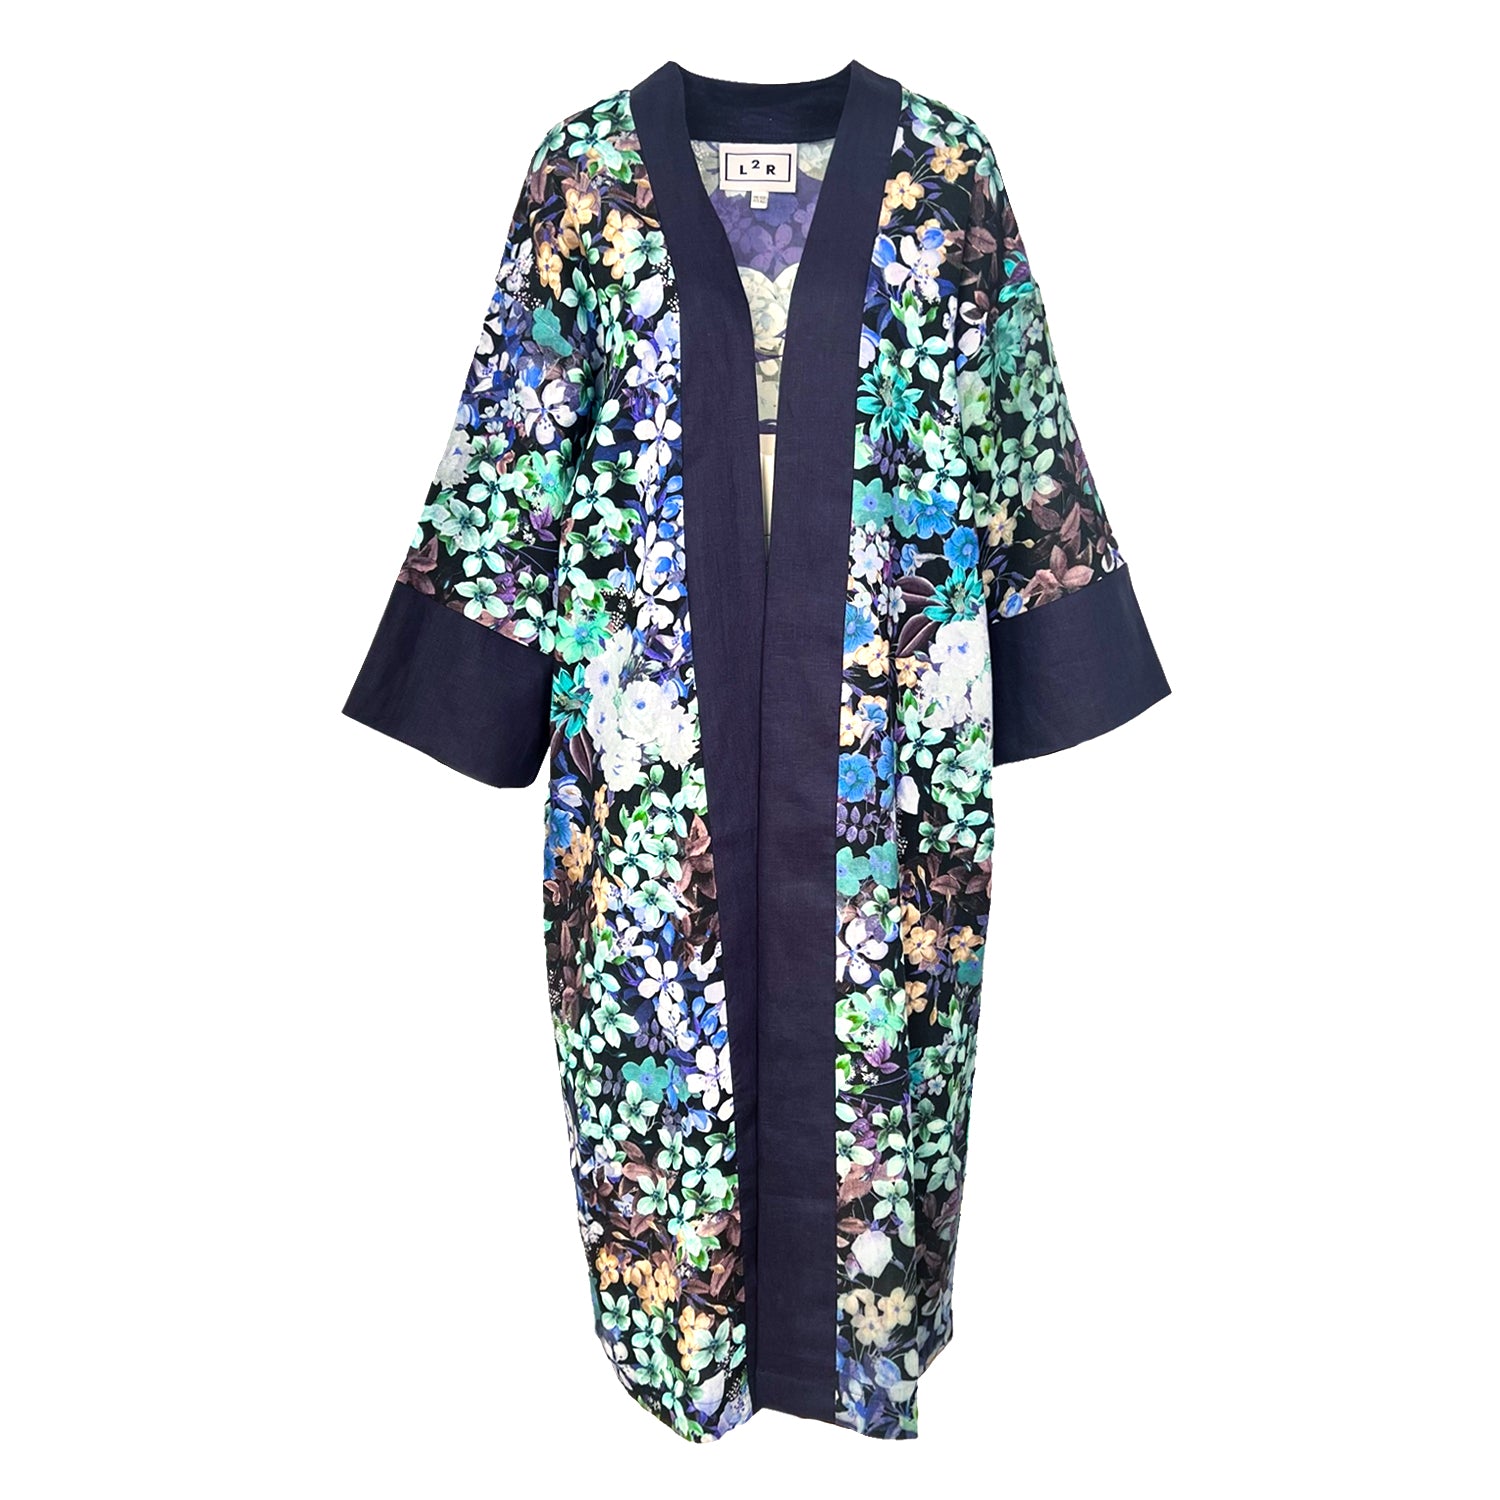 L2r The Label Women's Double Face Kaftan Kimono - Floral Blue Print